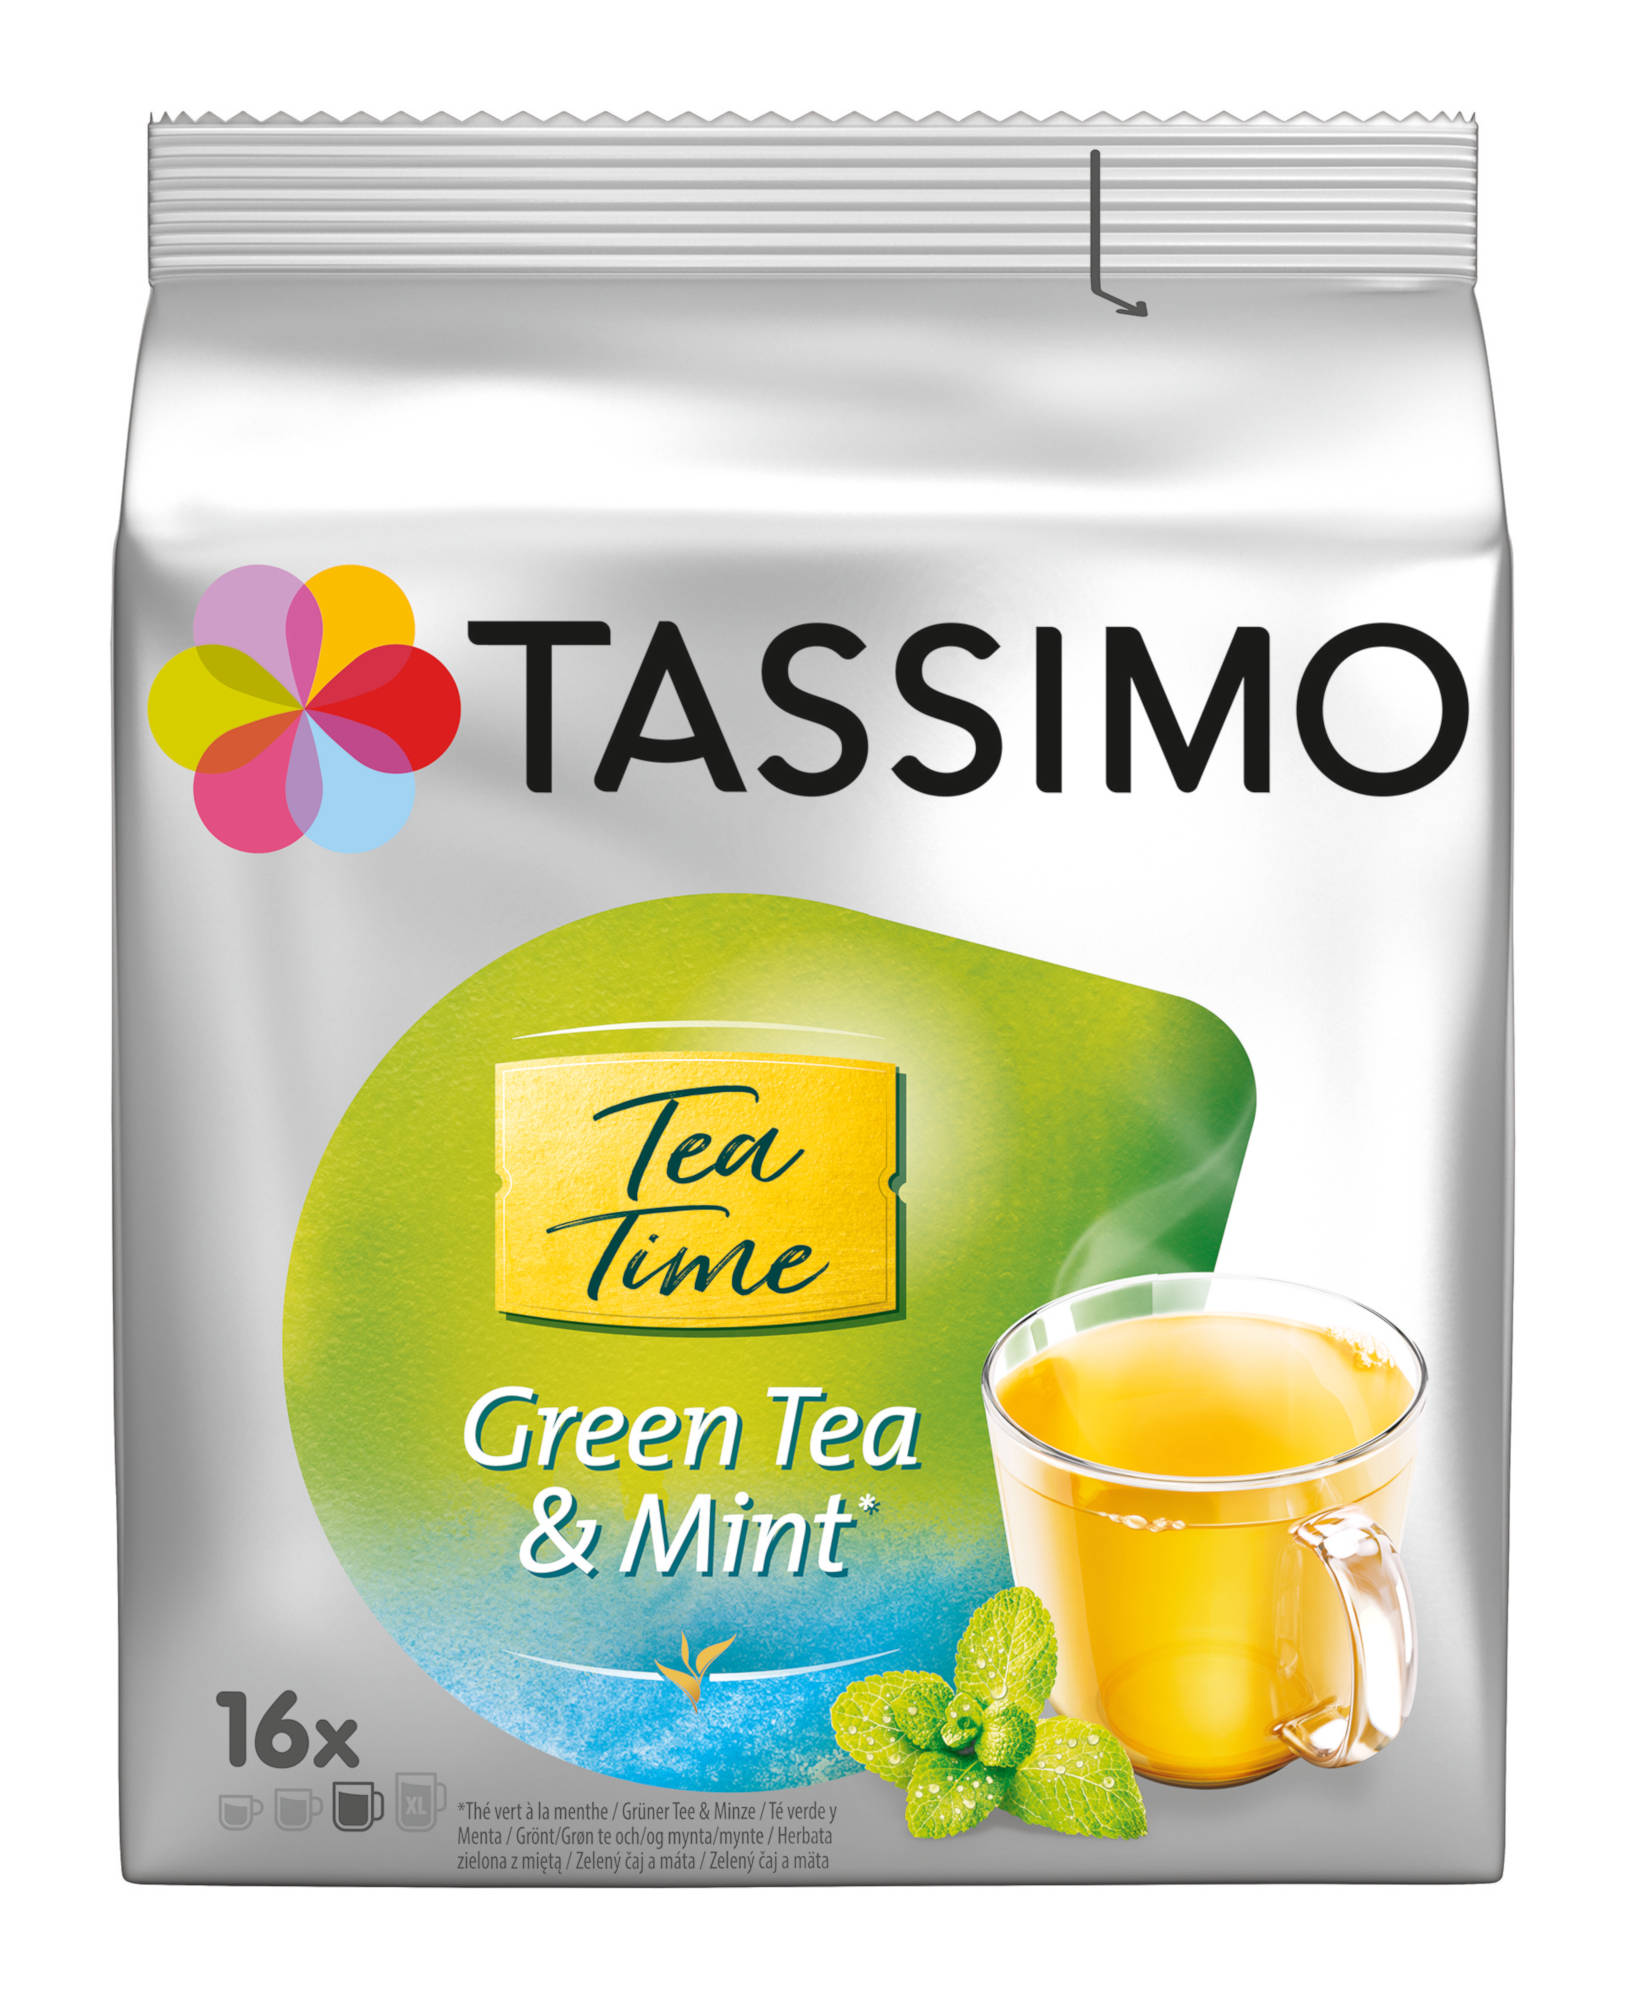 TASSIMO Tea System)) Time (T-Disc T 16 Grüner 5 Tee mit Discs (Tassimo Maschine Getränke Minze Teekapseln x